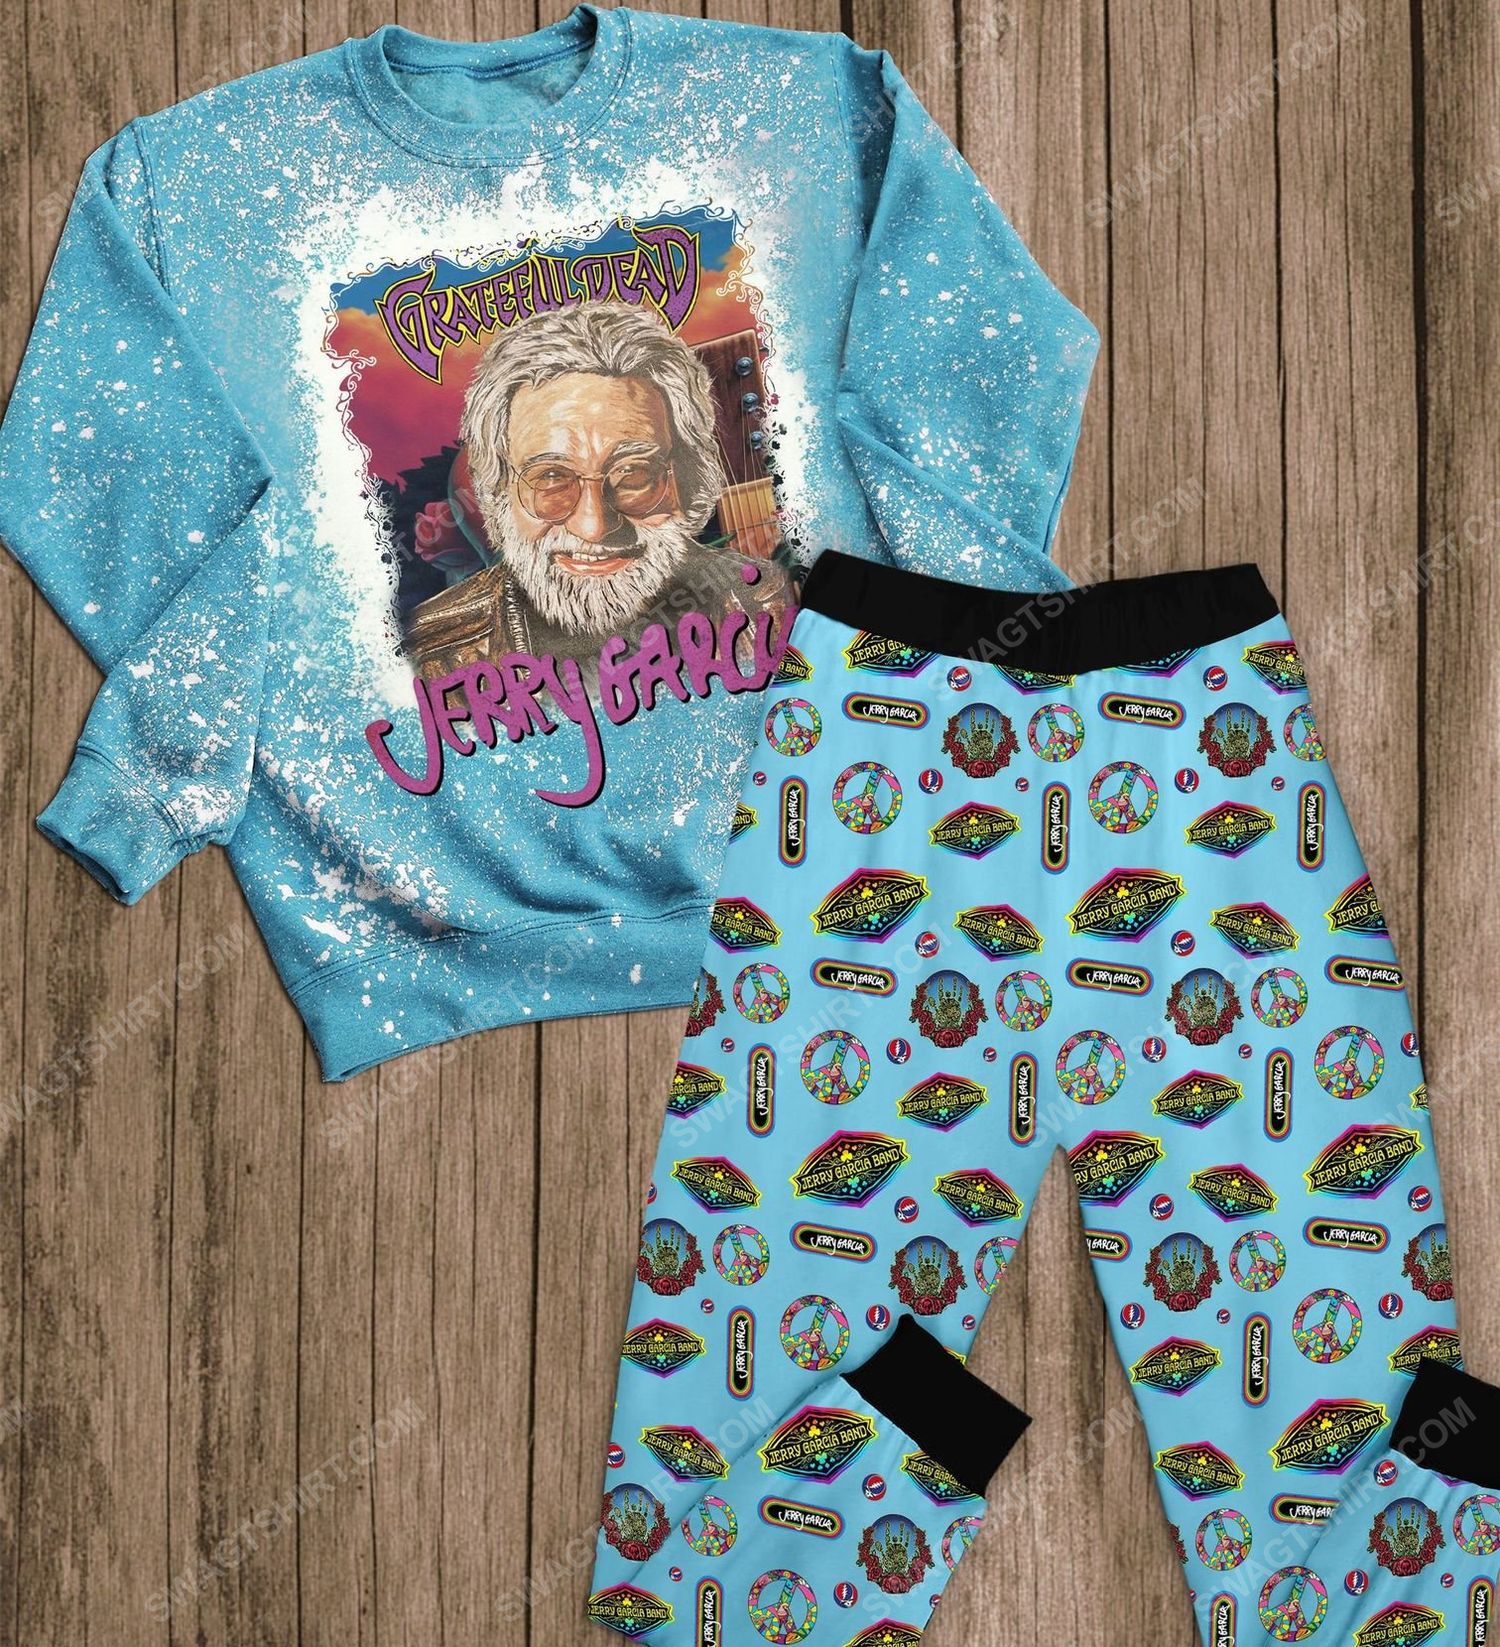 Grateful dead jerry garcia full print pajamas set 1 - Copy